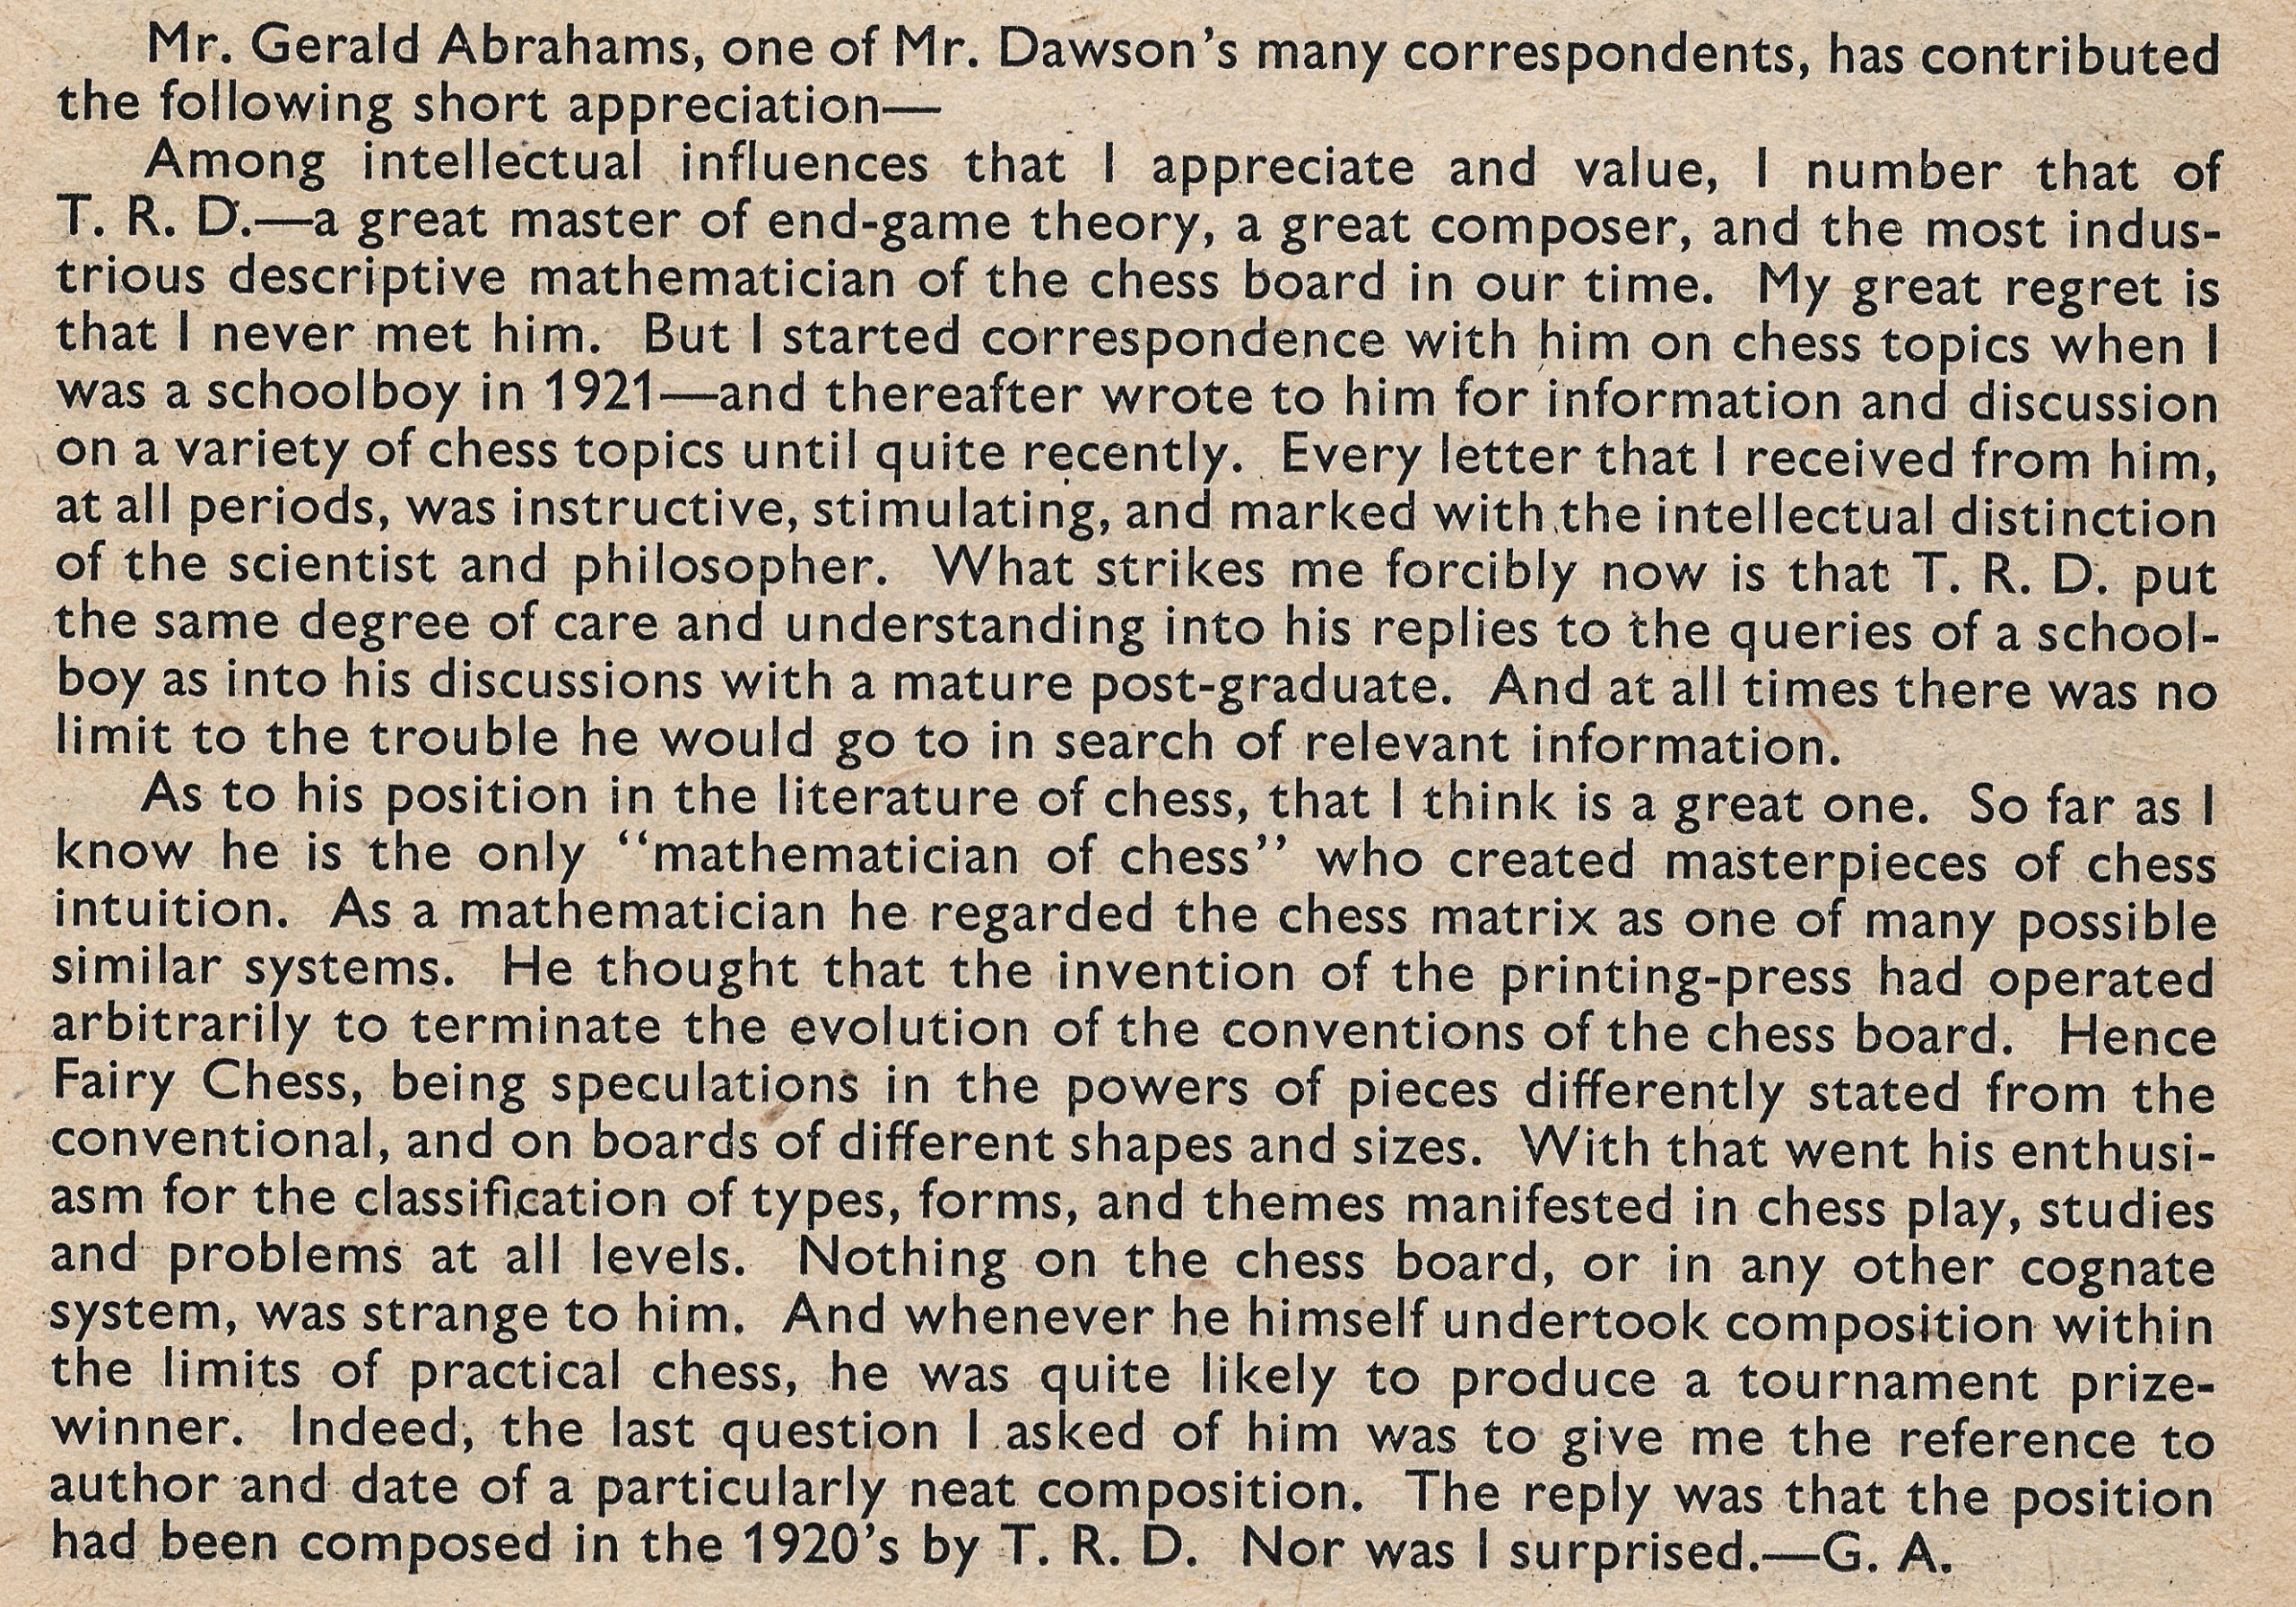 British Chess Magazine, Volume LXXII (72, 1952), Number 4 (April) pp. 107 - 108